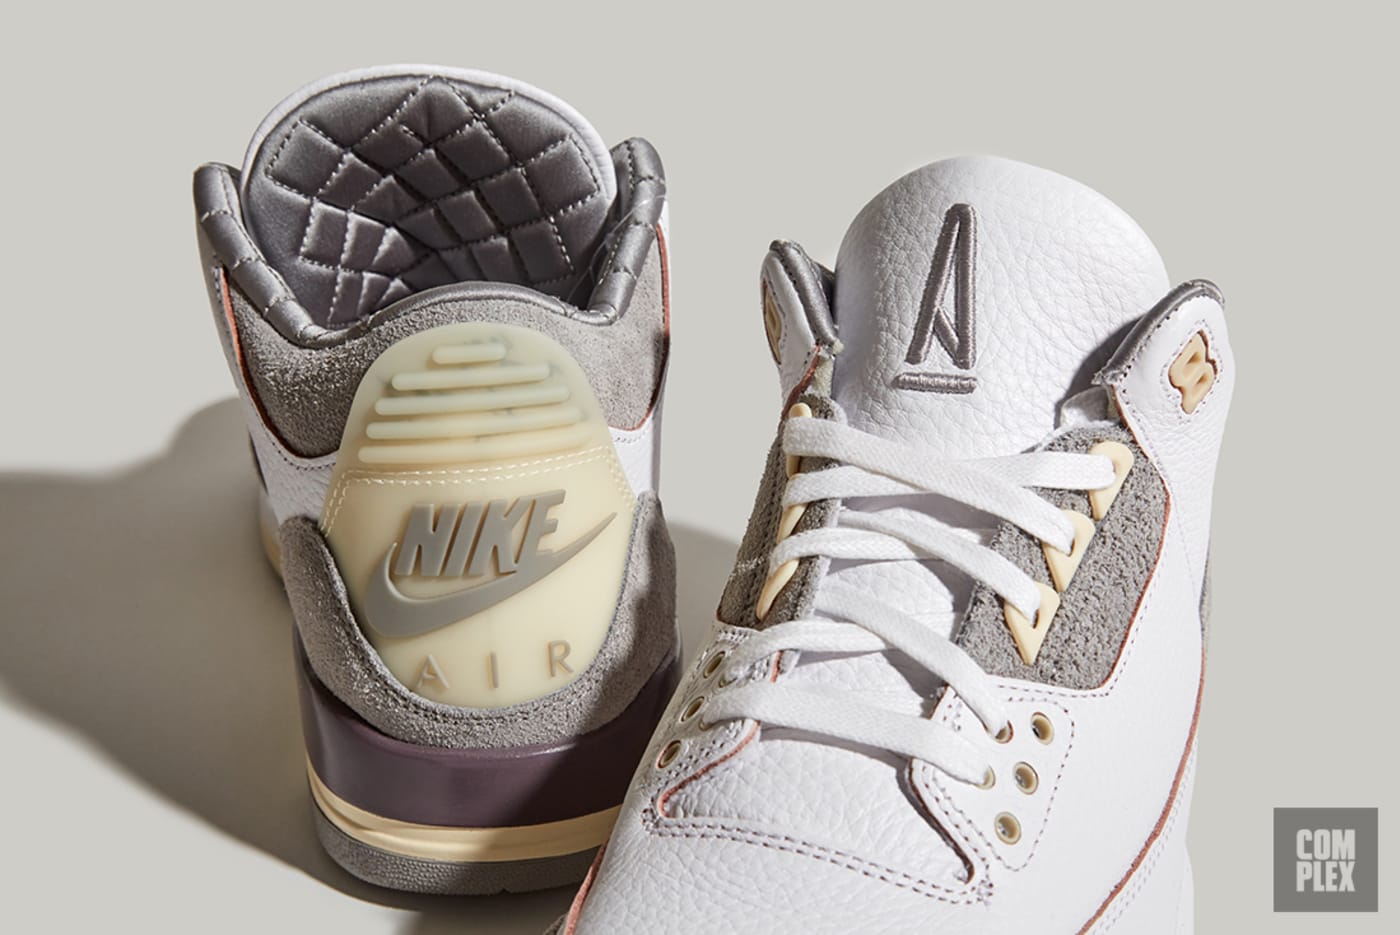 A Ma Maniere x Air Jordan 3 “Raised By Women” Sneaker Story | Complex